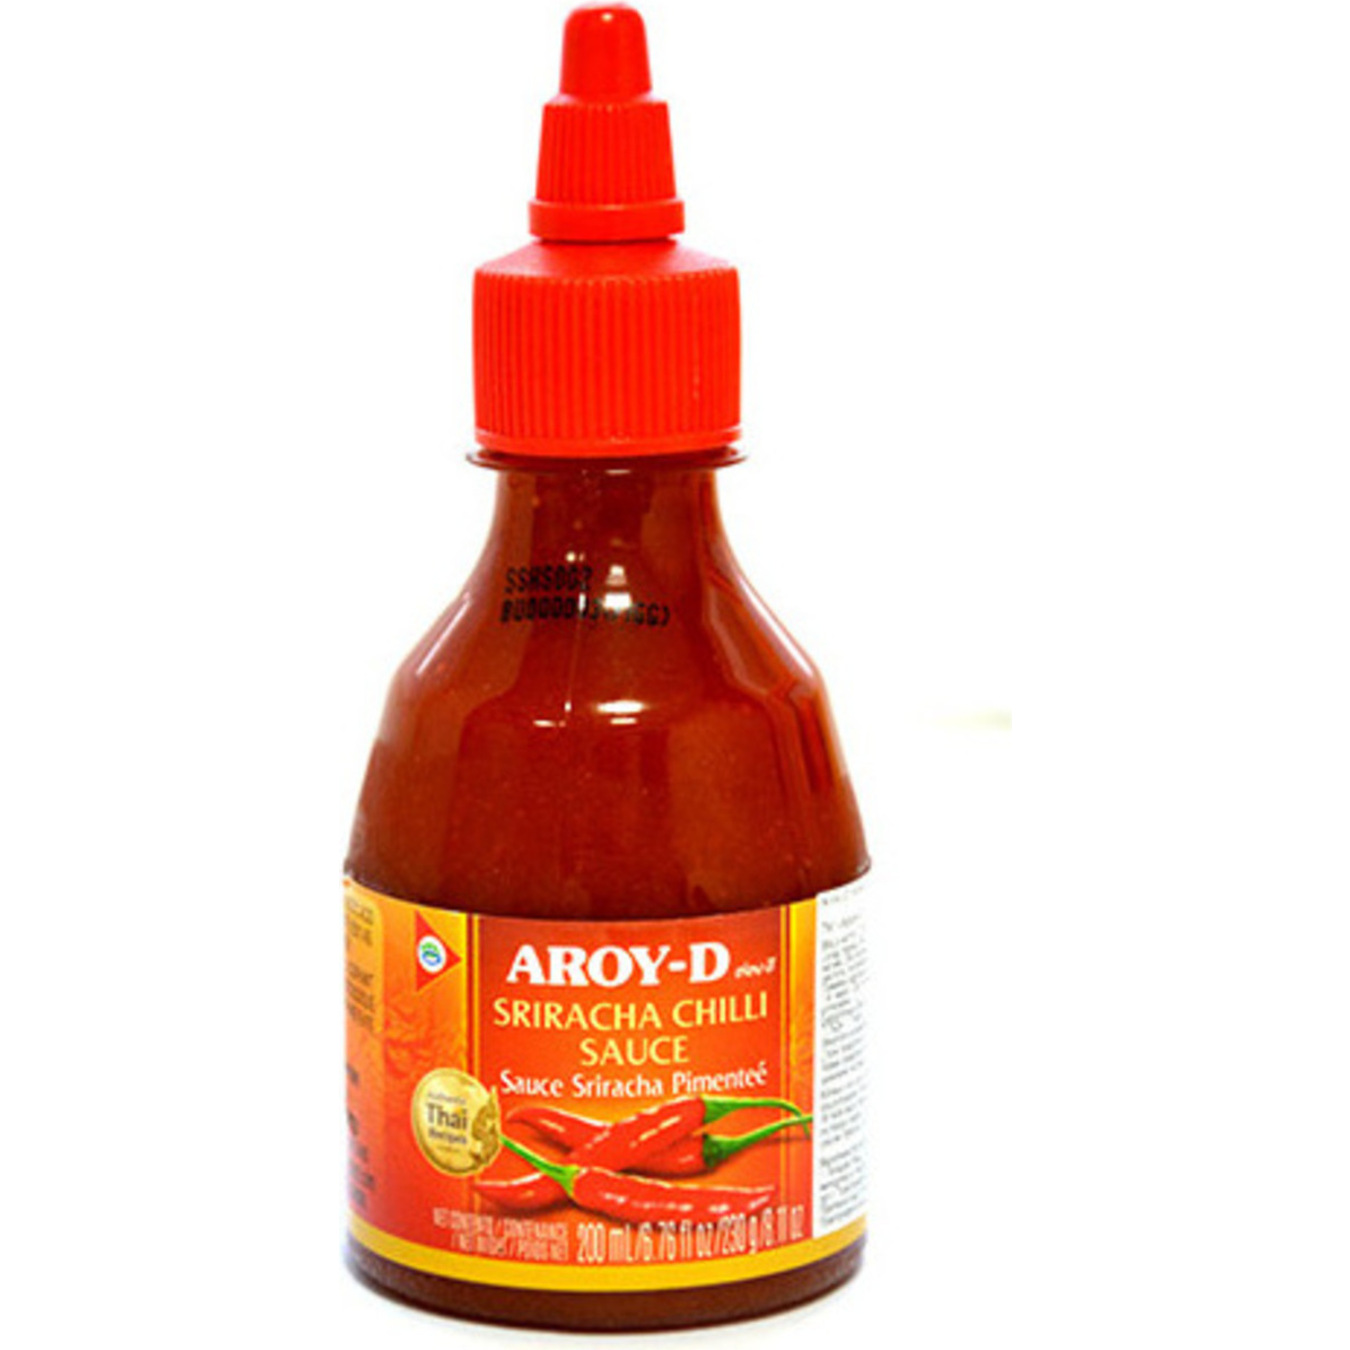 Sauce Aroy-D Chili Sriracha 230g